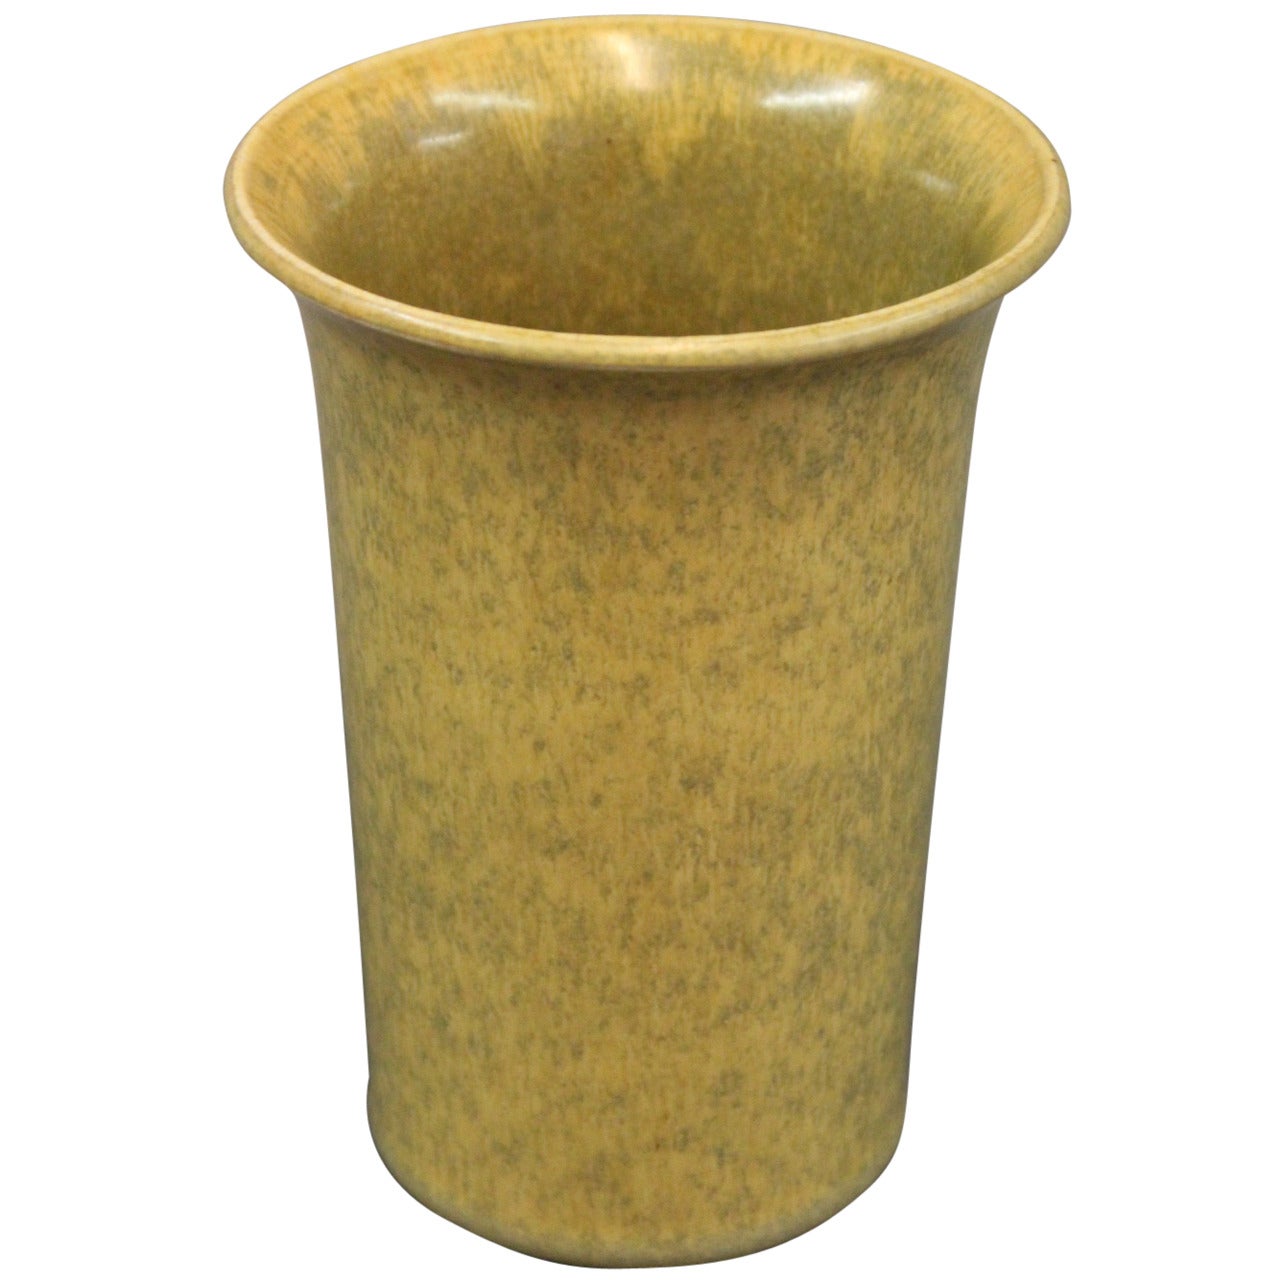 Saxbo Vase No. 29 Manufactured Stoneware in Denmark, 1930-1950